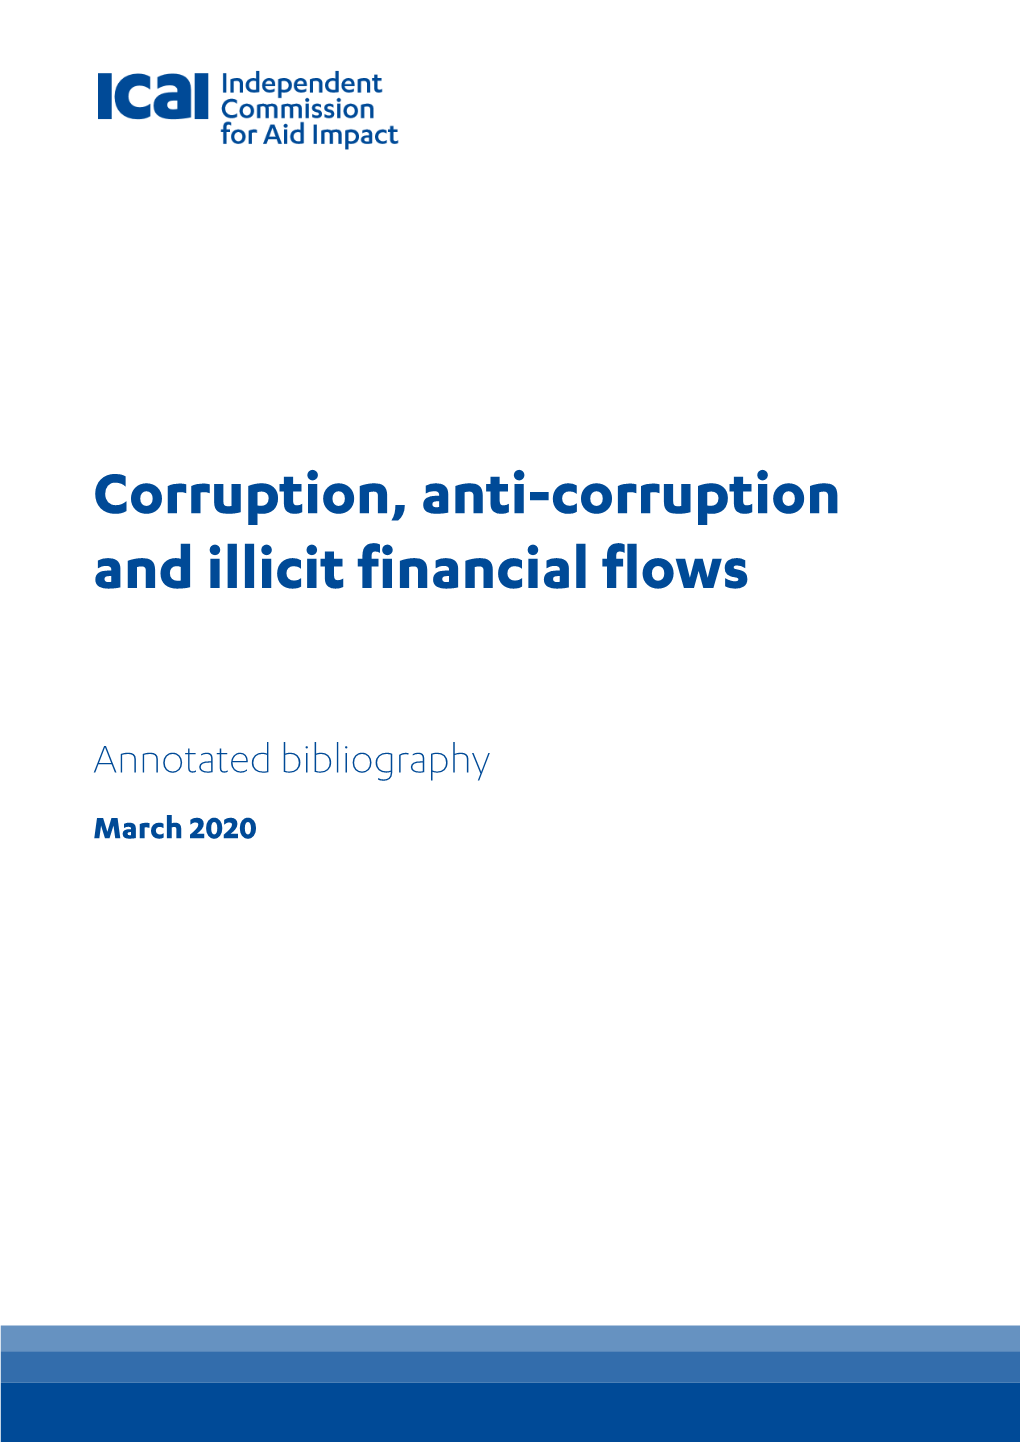 Corruption, Anti-Corruption and Illicit Financial Flows